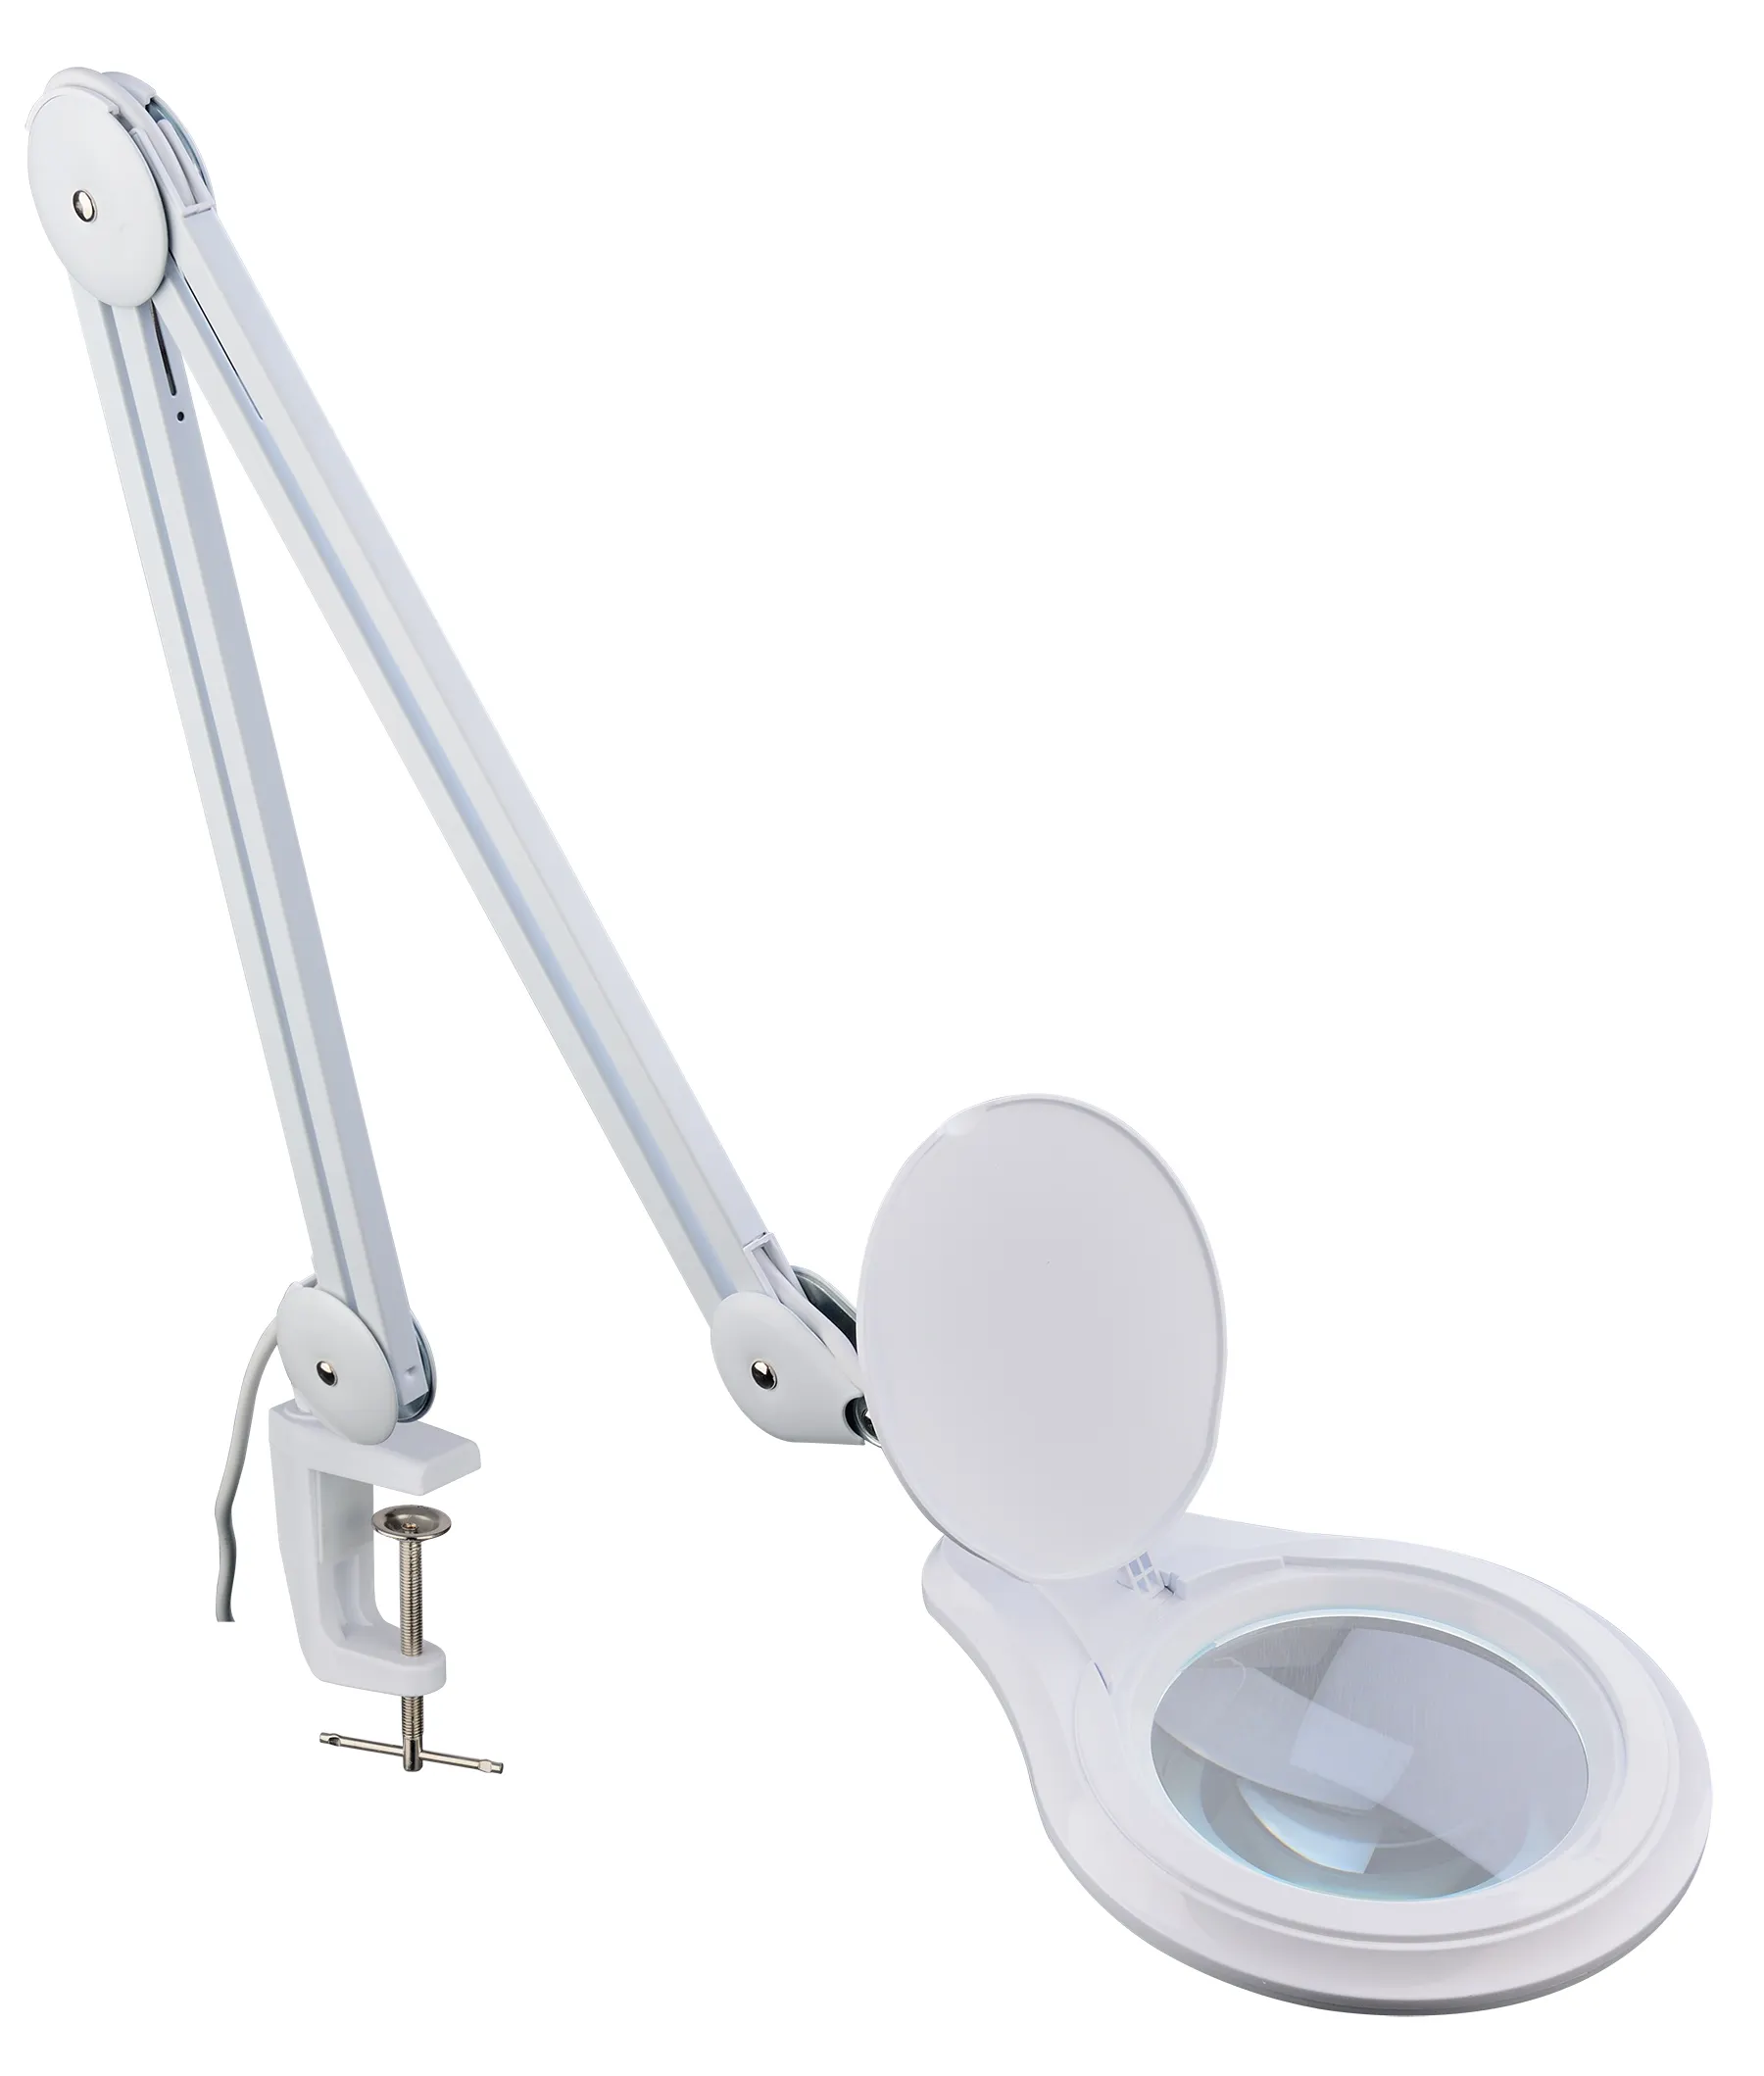 Salon furniture beauty light 3D magnifying glass lens LED lamp eyelash extension kit